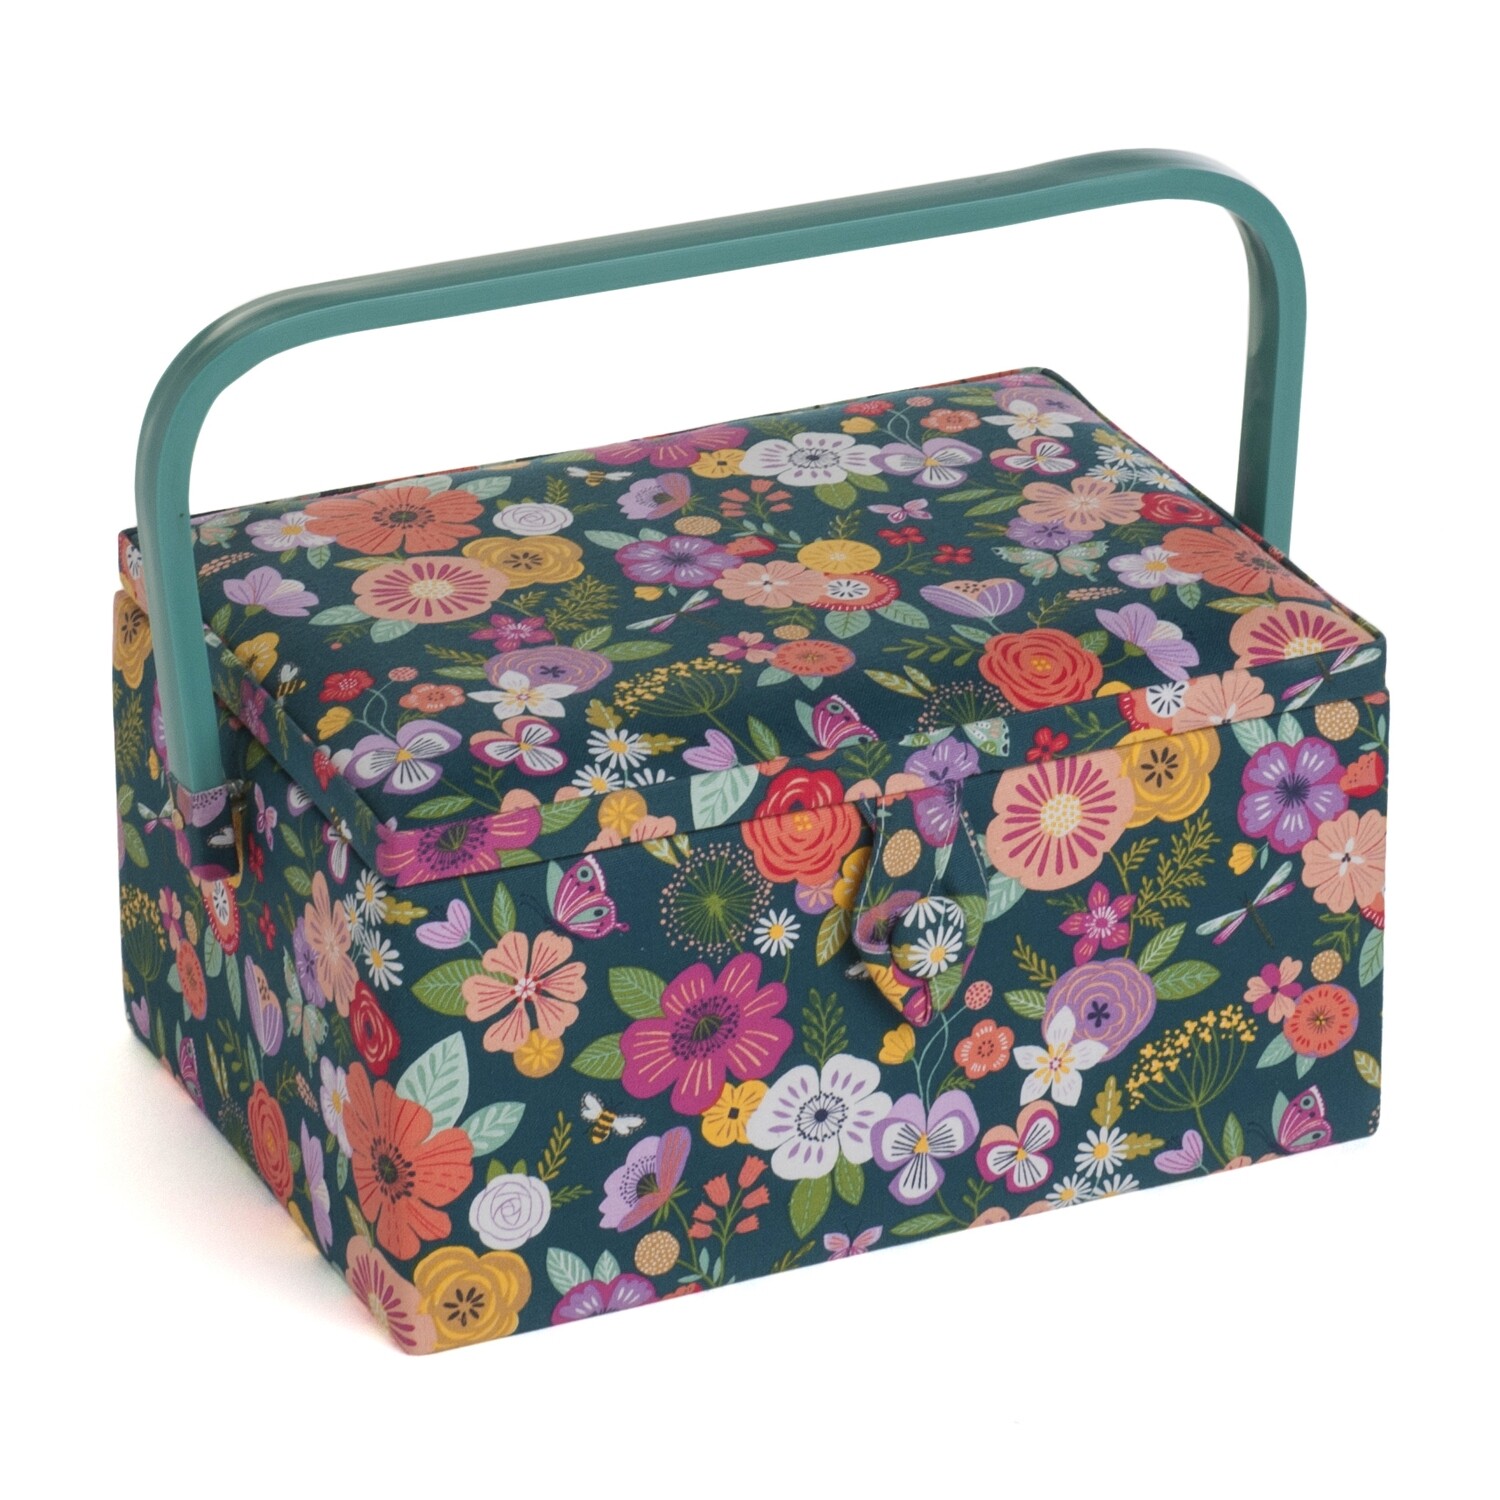 Sewing Box Medium - Floral Garden Teal